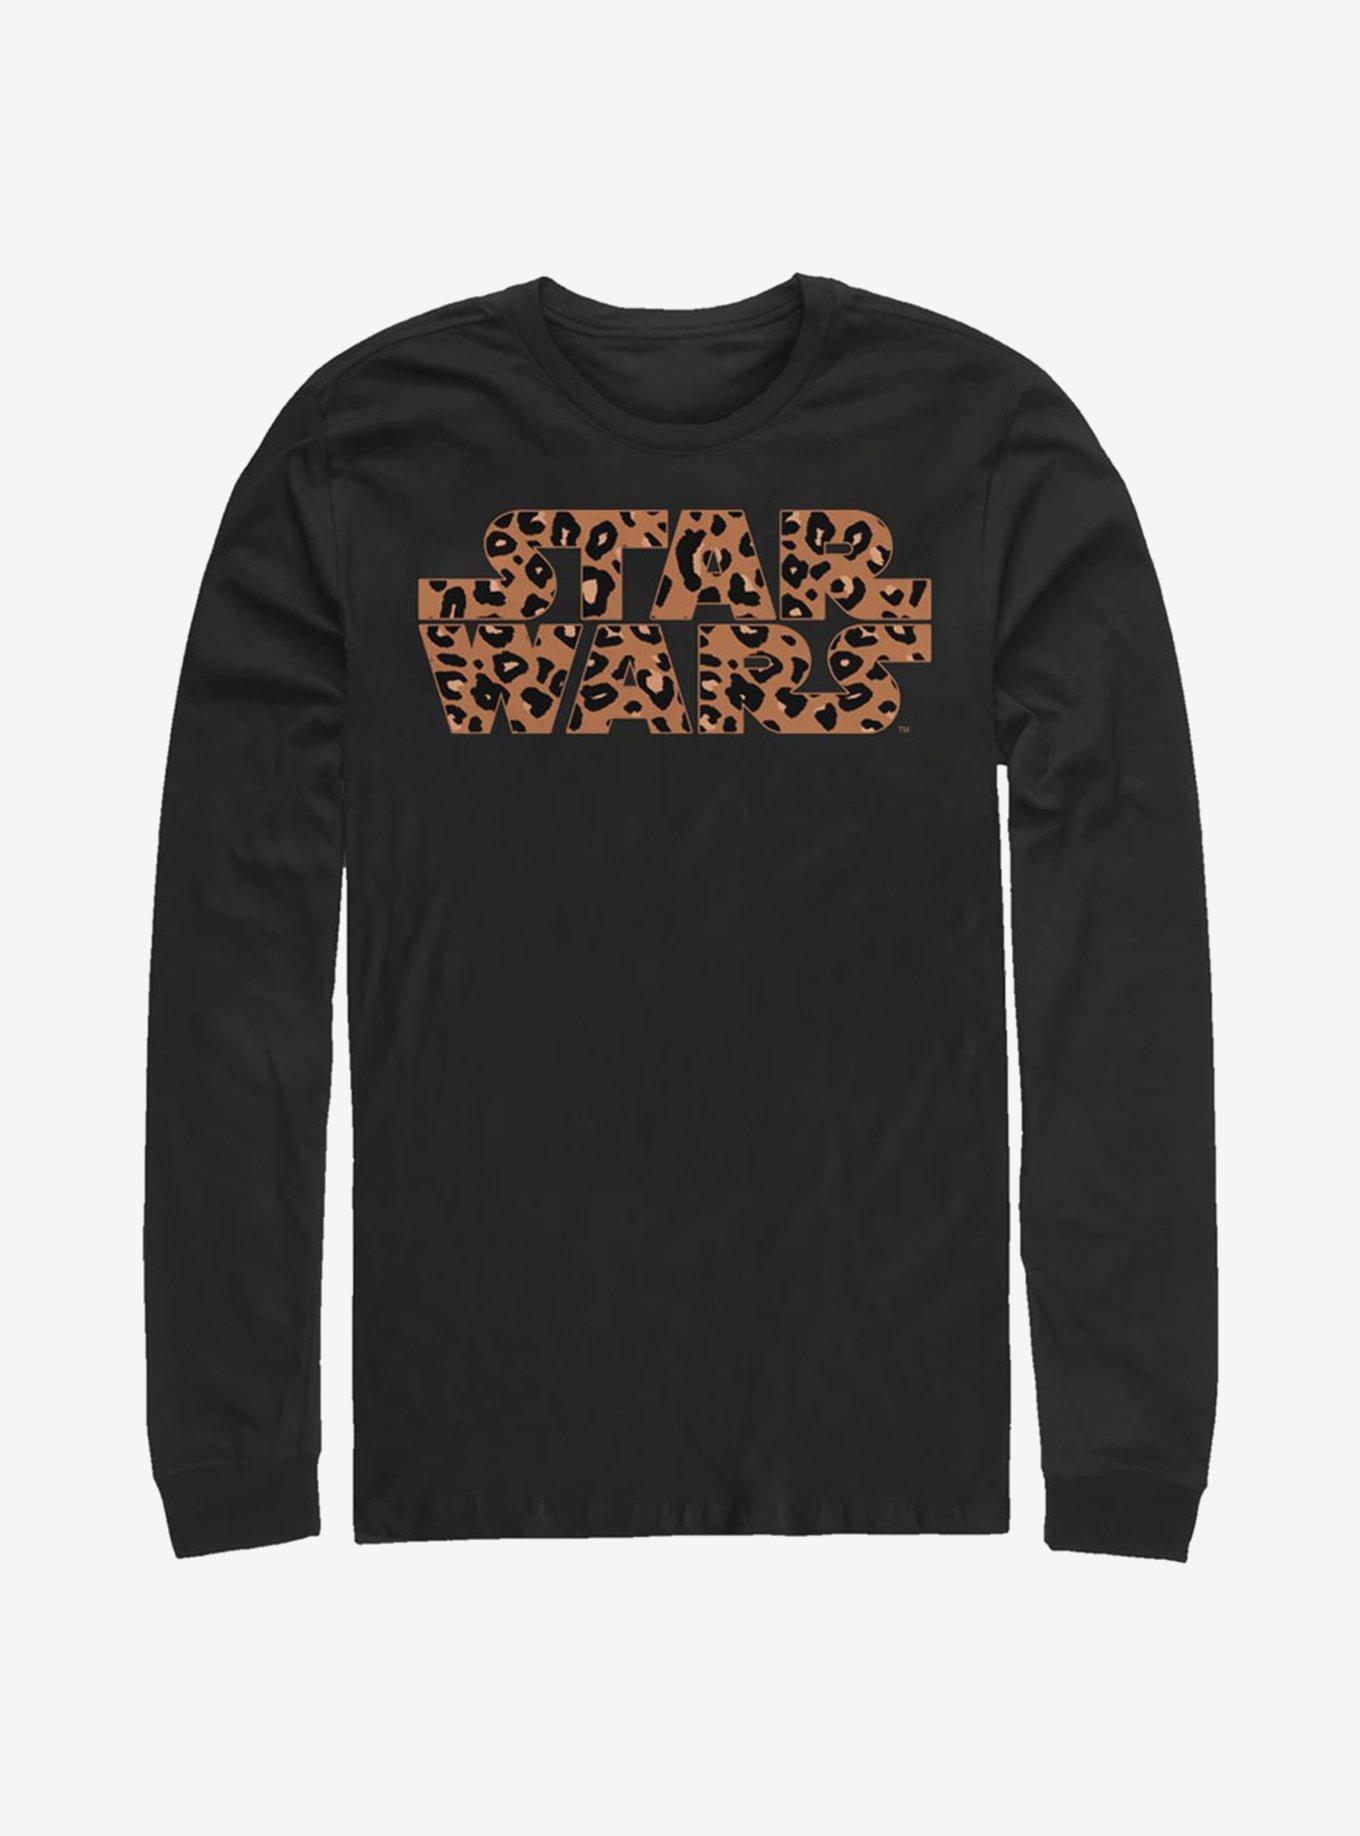 Star Wars Star Wars Logo Cheetah Fill Long-Sleeve T-Shirt, BLACK, hi-res